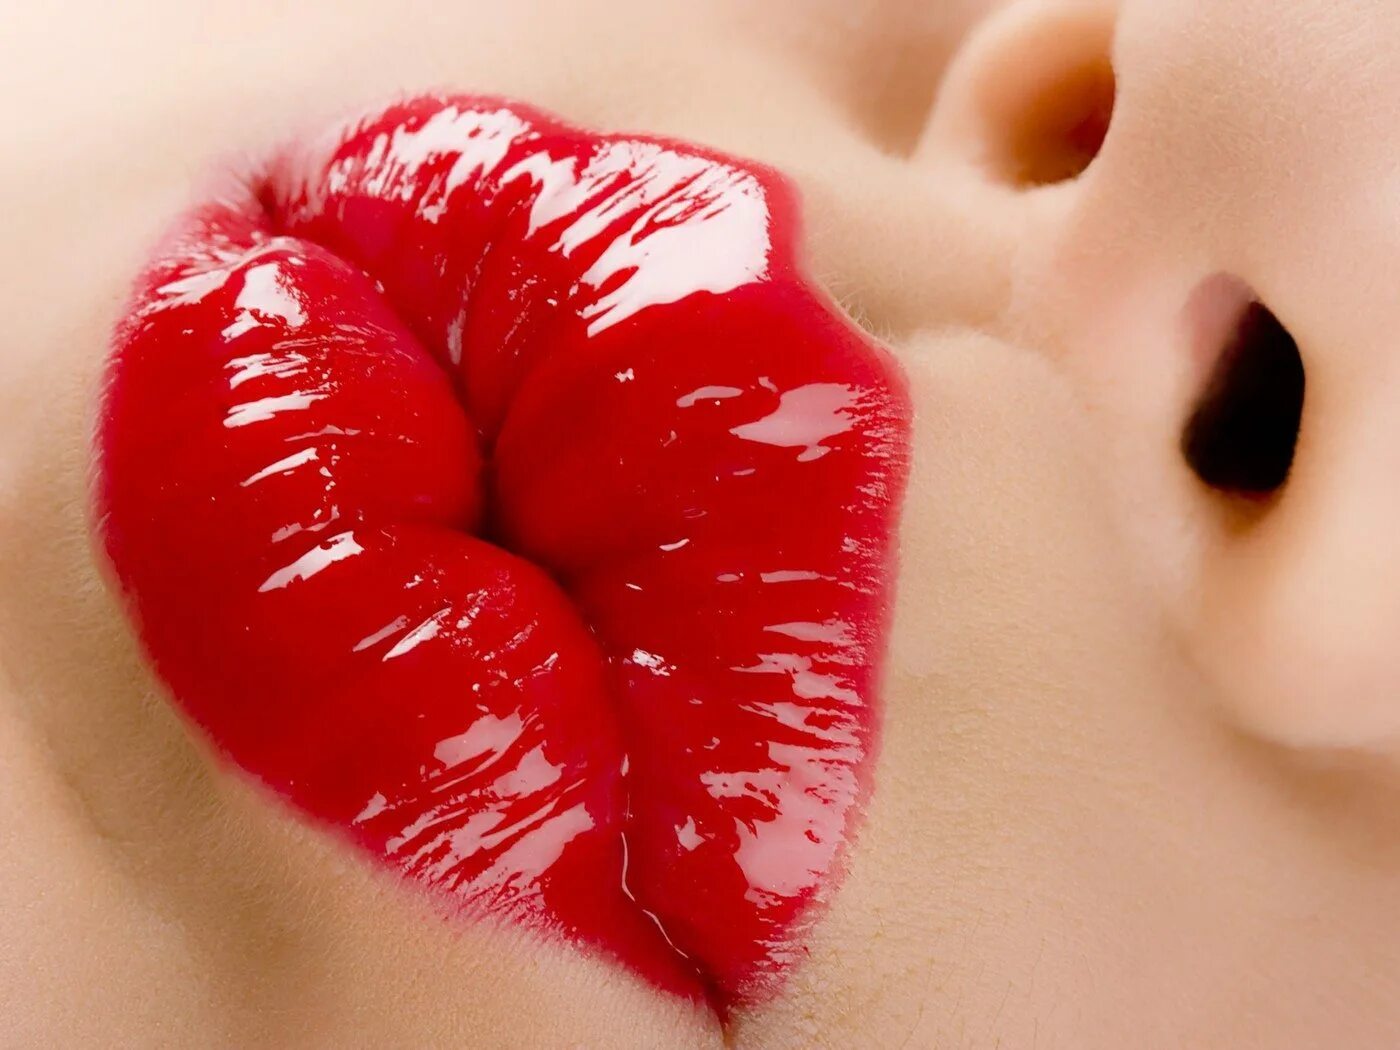 I love lips. Женские губы. Поцелуй в губы. Губки поцелуй. Красивые губки.